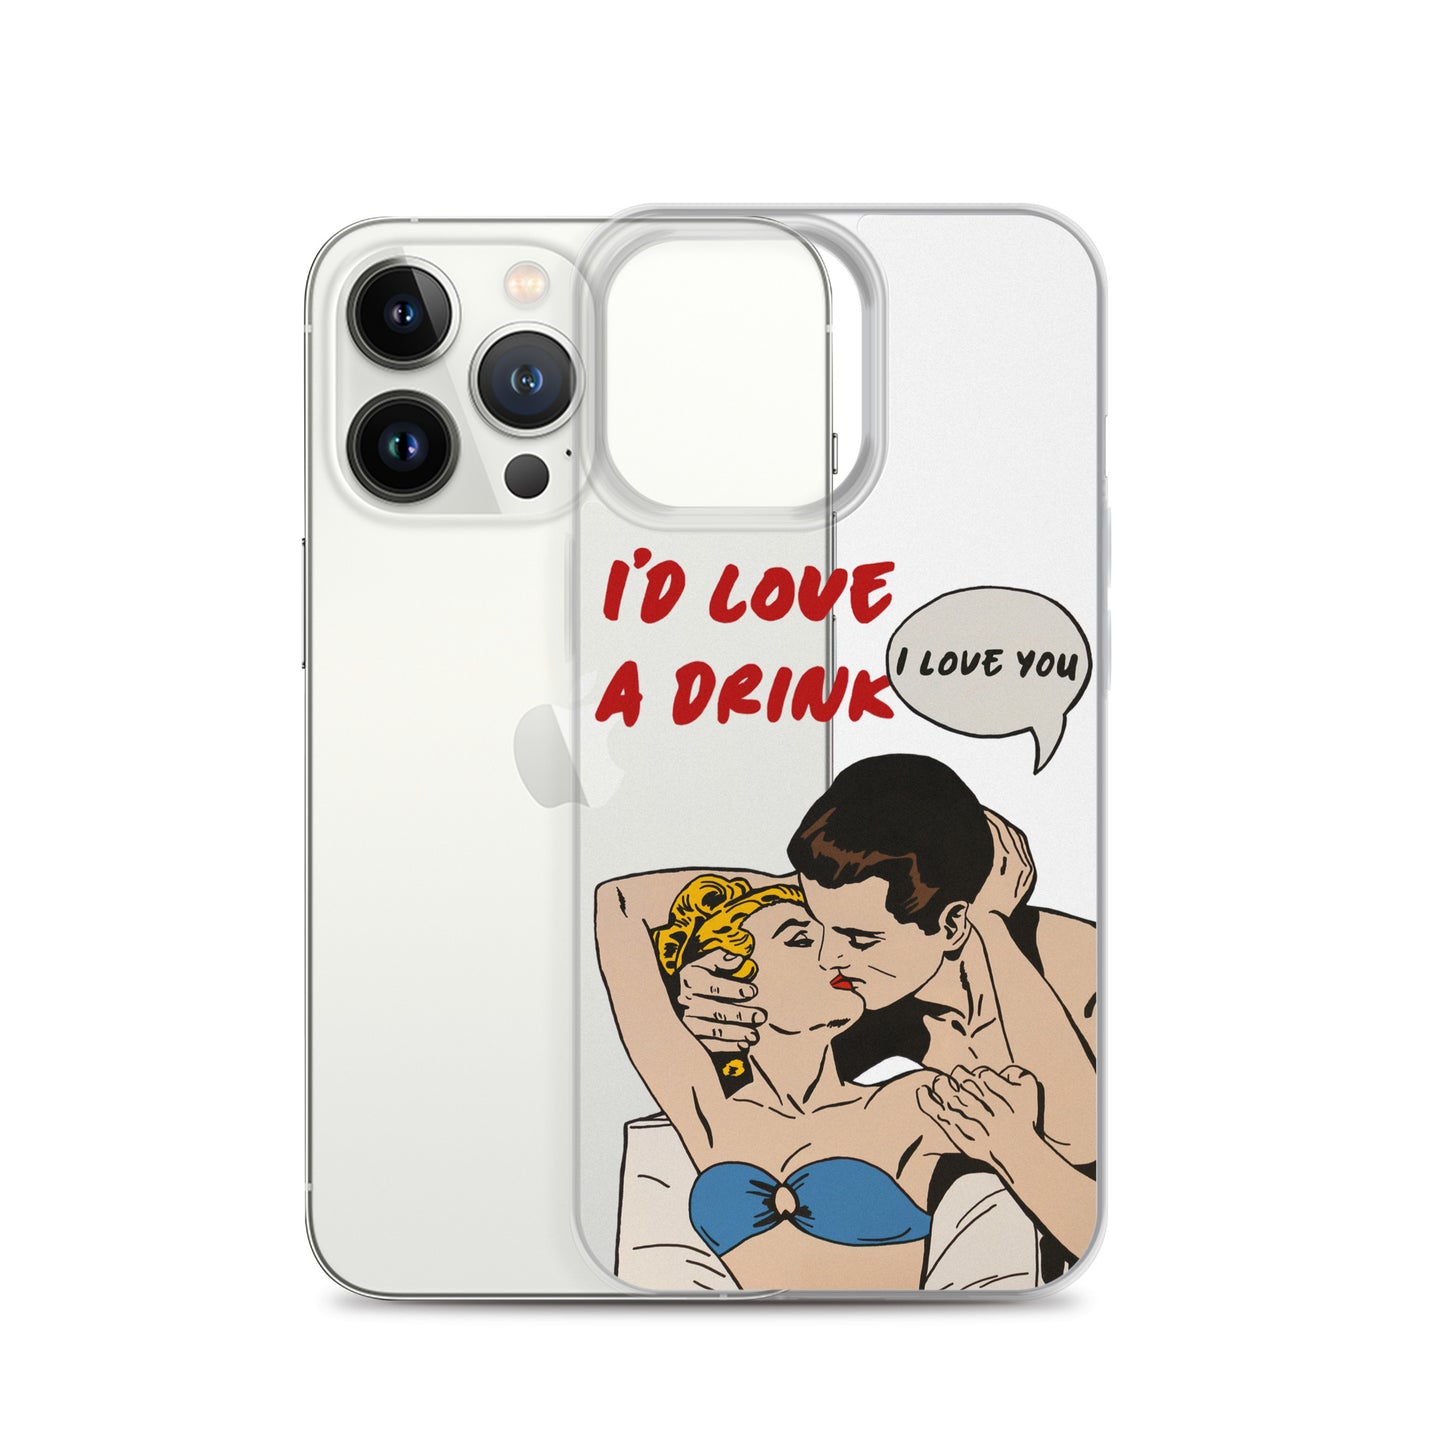 "I Love You" iPhone Case